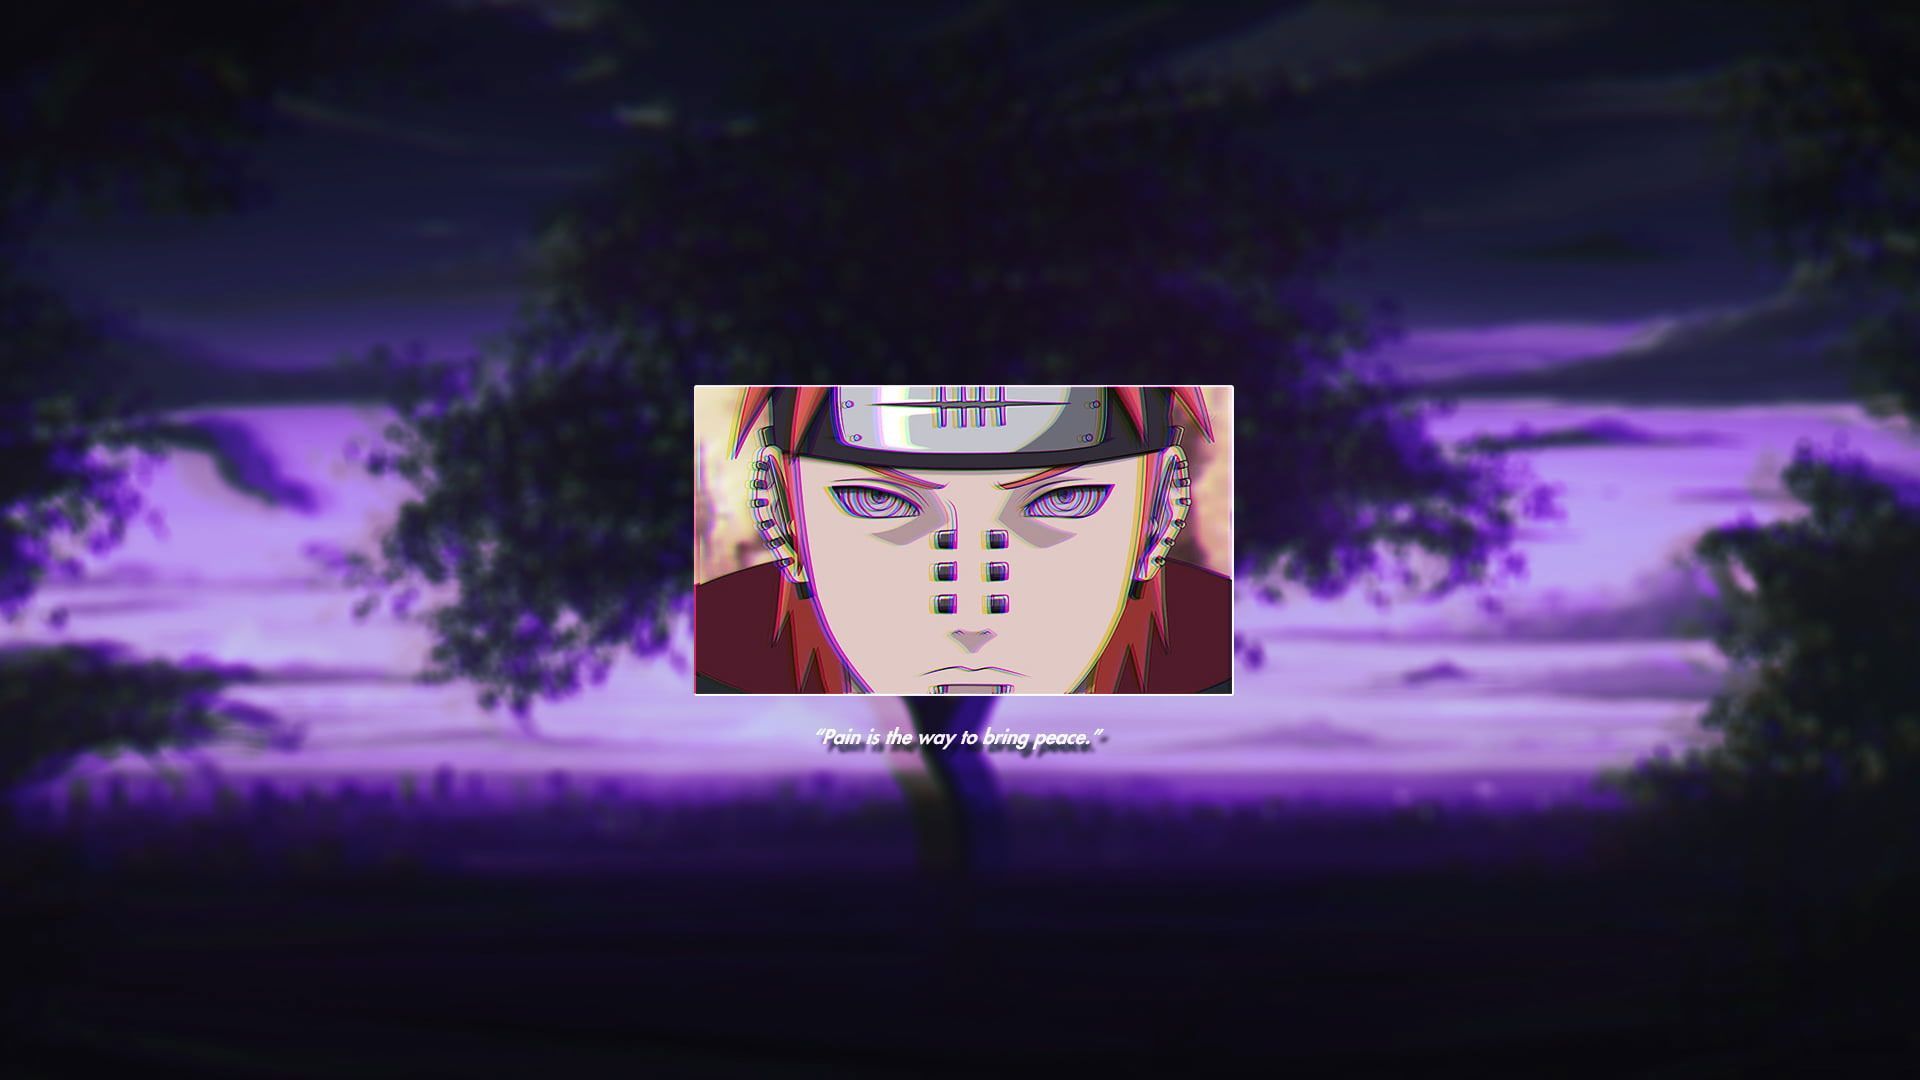 Naruto (anime) wallpaper, purple background, VHS, anime boys, Rinnegan. Anime wallpaper 1920x Aesthetic anime, Anime background wallpaper